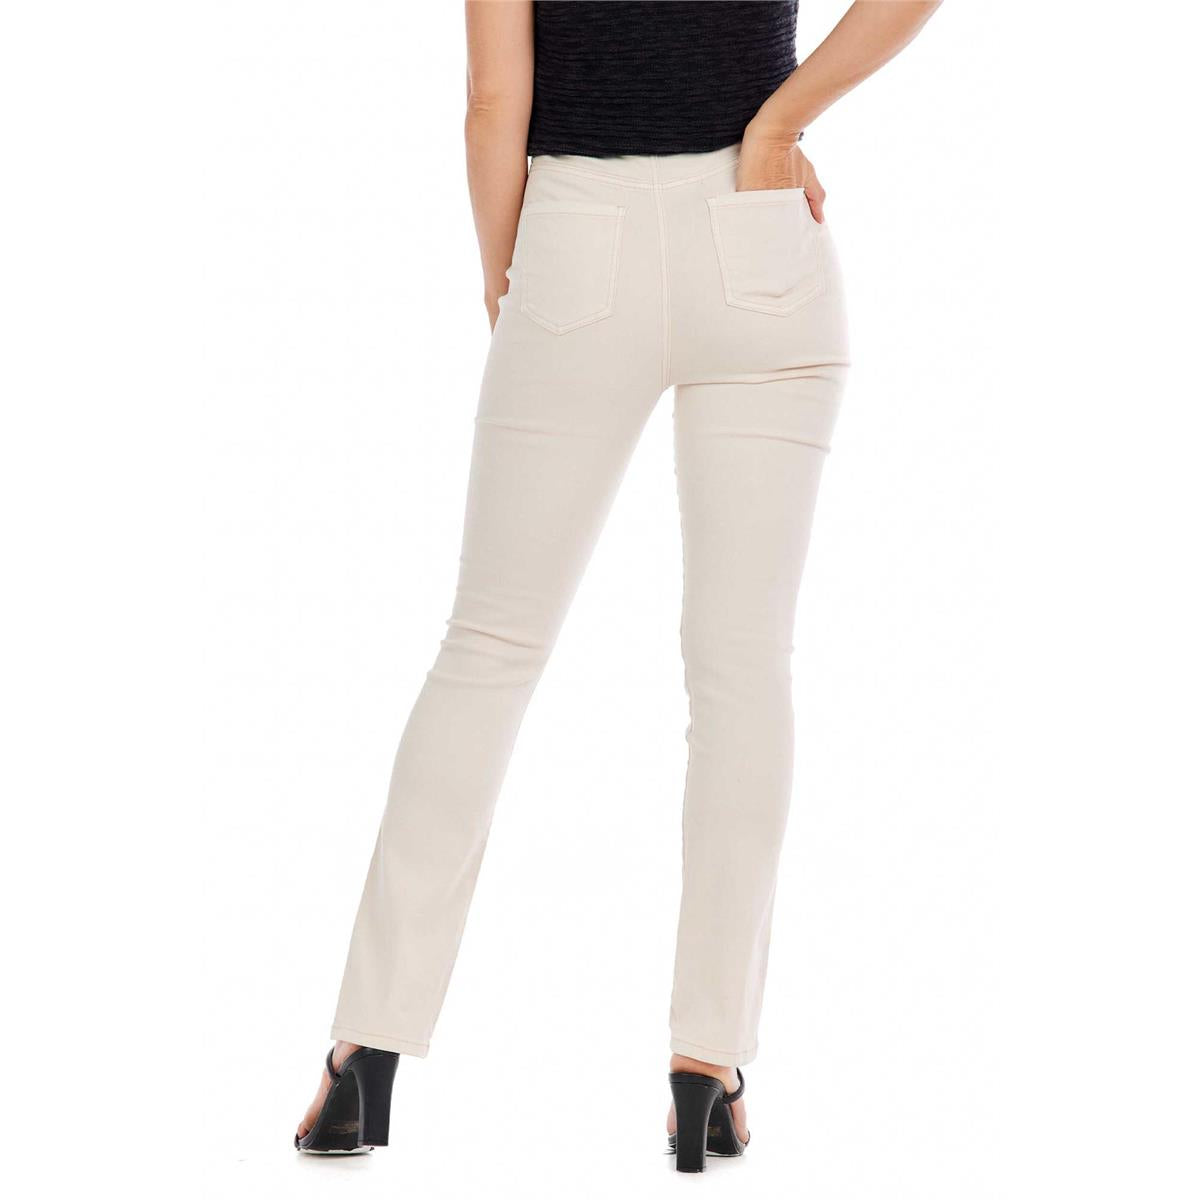 Blush Yorker Side-Slit Jeans - The Season Boutique